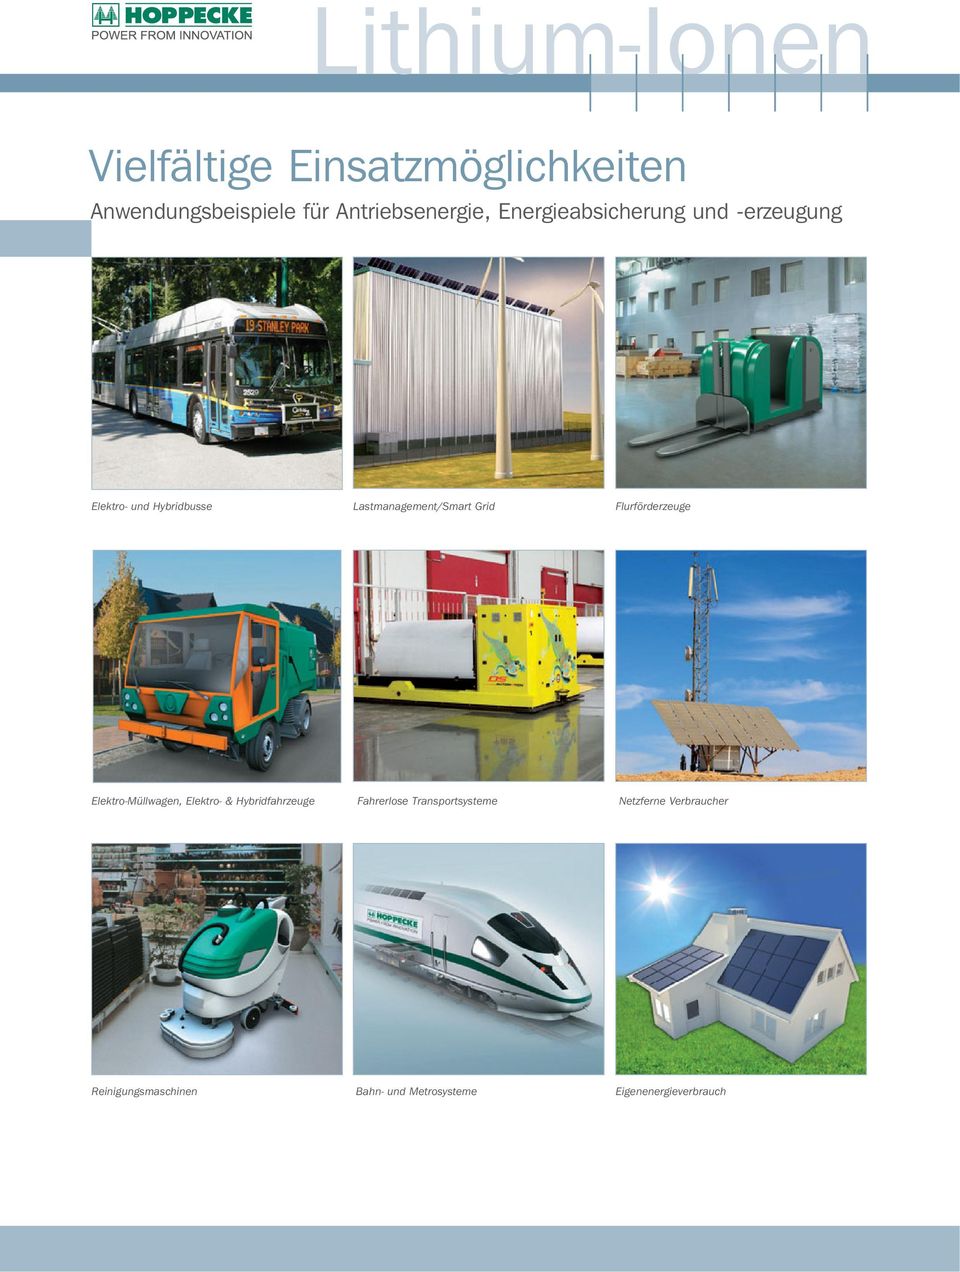 Grid Flurförderzeuge Elektro-Müllwagen, Elektro- & Hybridfahrzeuge Fahrerlose